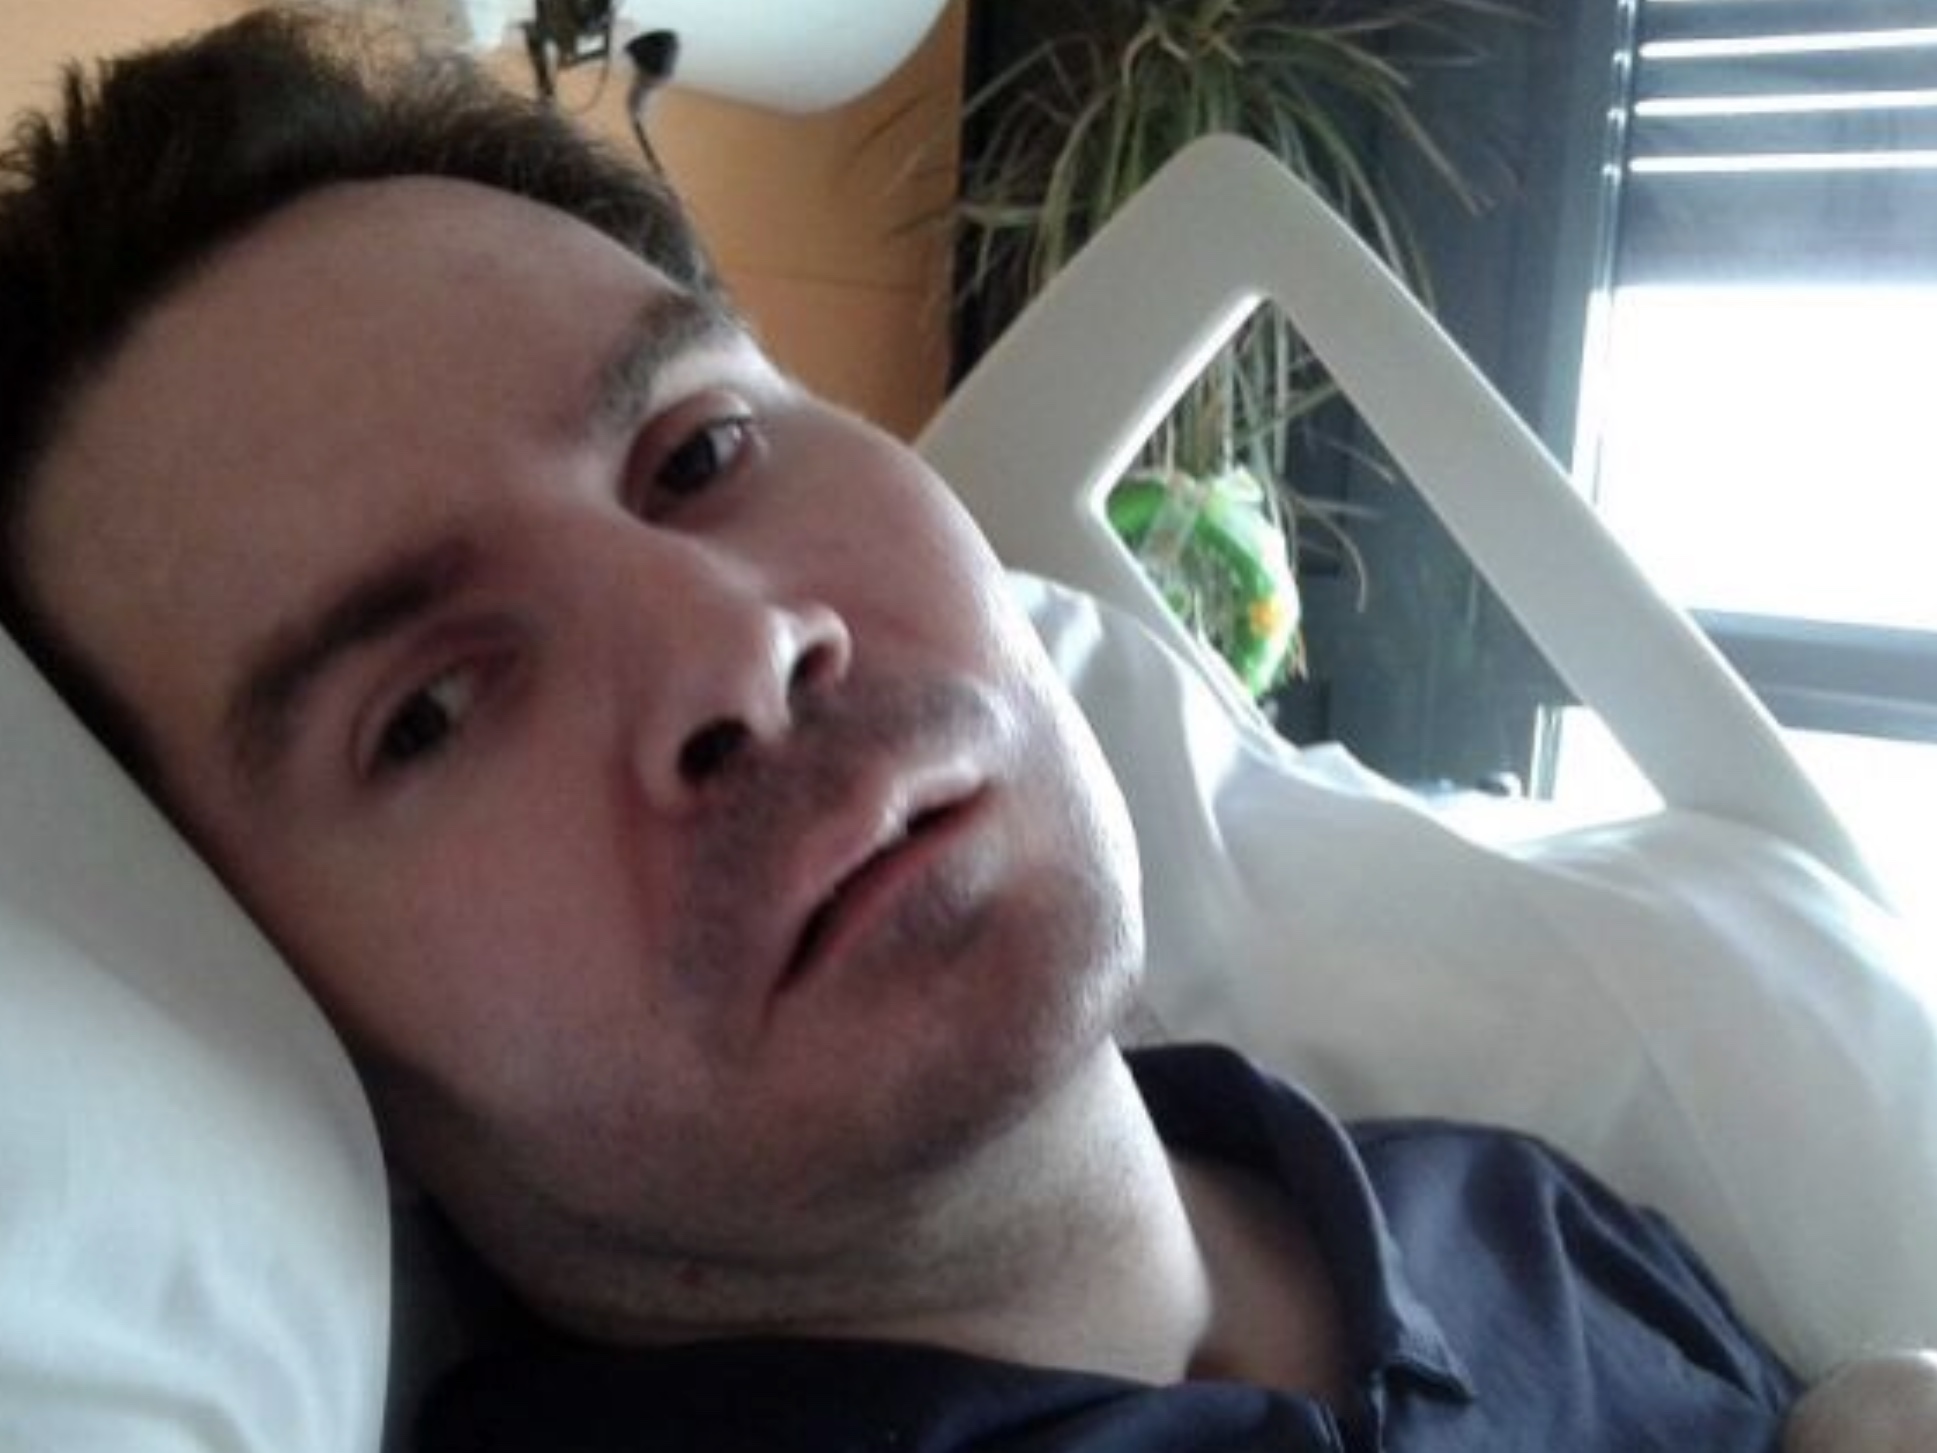 Quadriplegic Man is Being Starved to Death